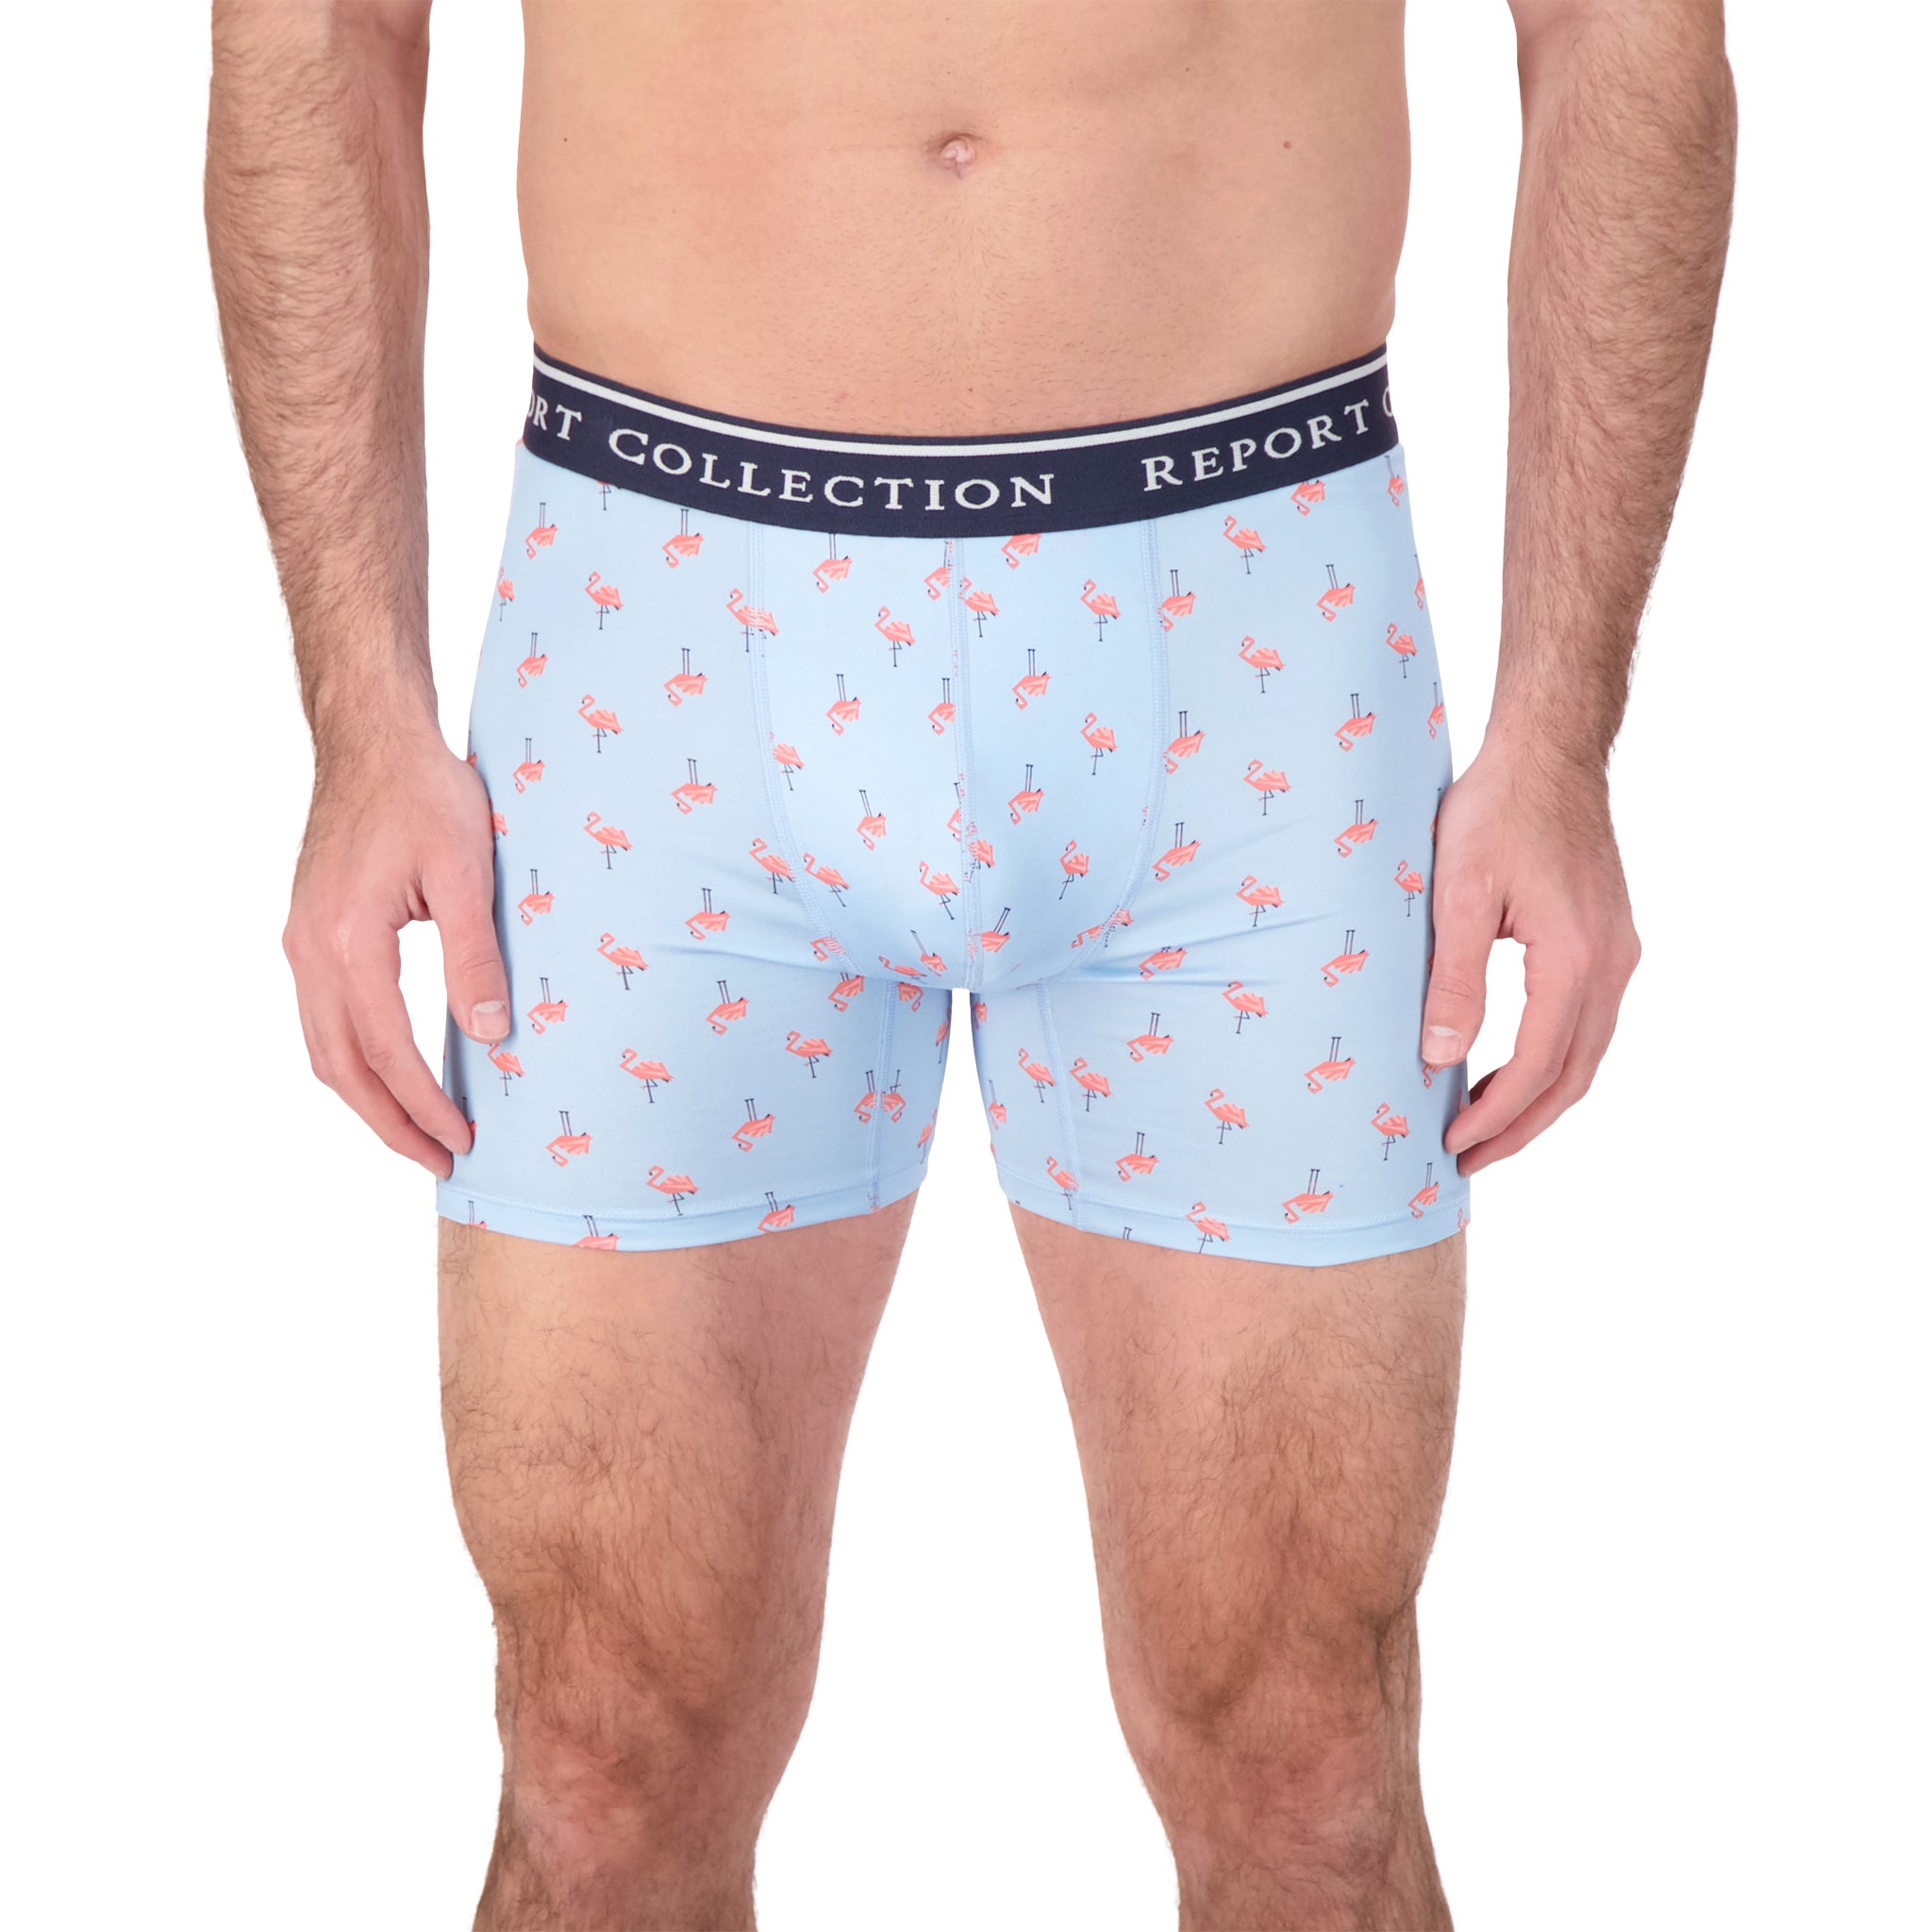 puberteit Permanent reactie Two Pack Boxer Underwear in Flamingo Print & Light Blue – Report Collection